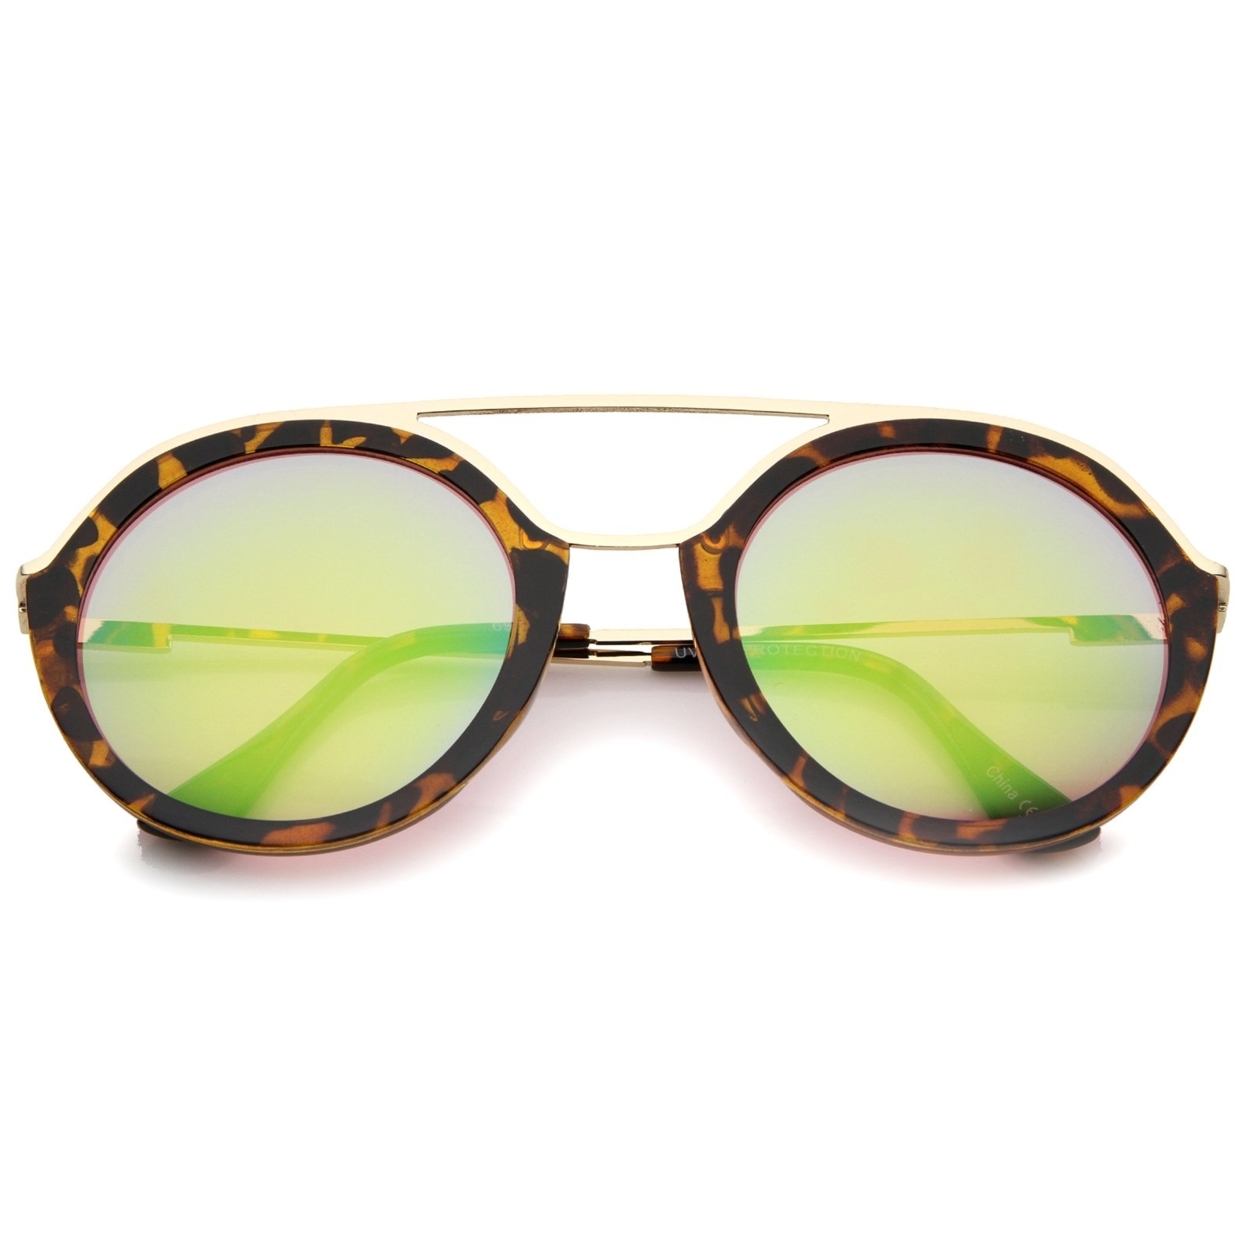 Modern Metal Double Nose Bridge Colored Mirror Lens Round Sunglasses 52mm - Tortoise-Gold / Green-Pink Mirror